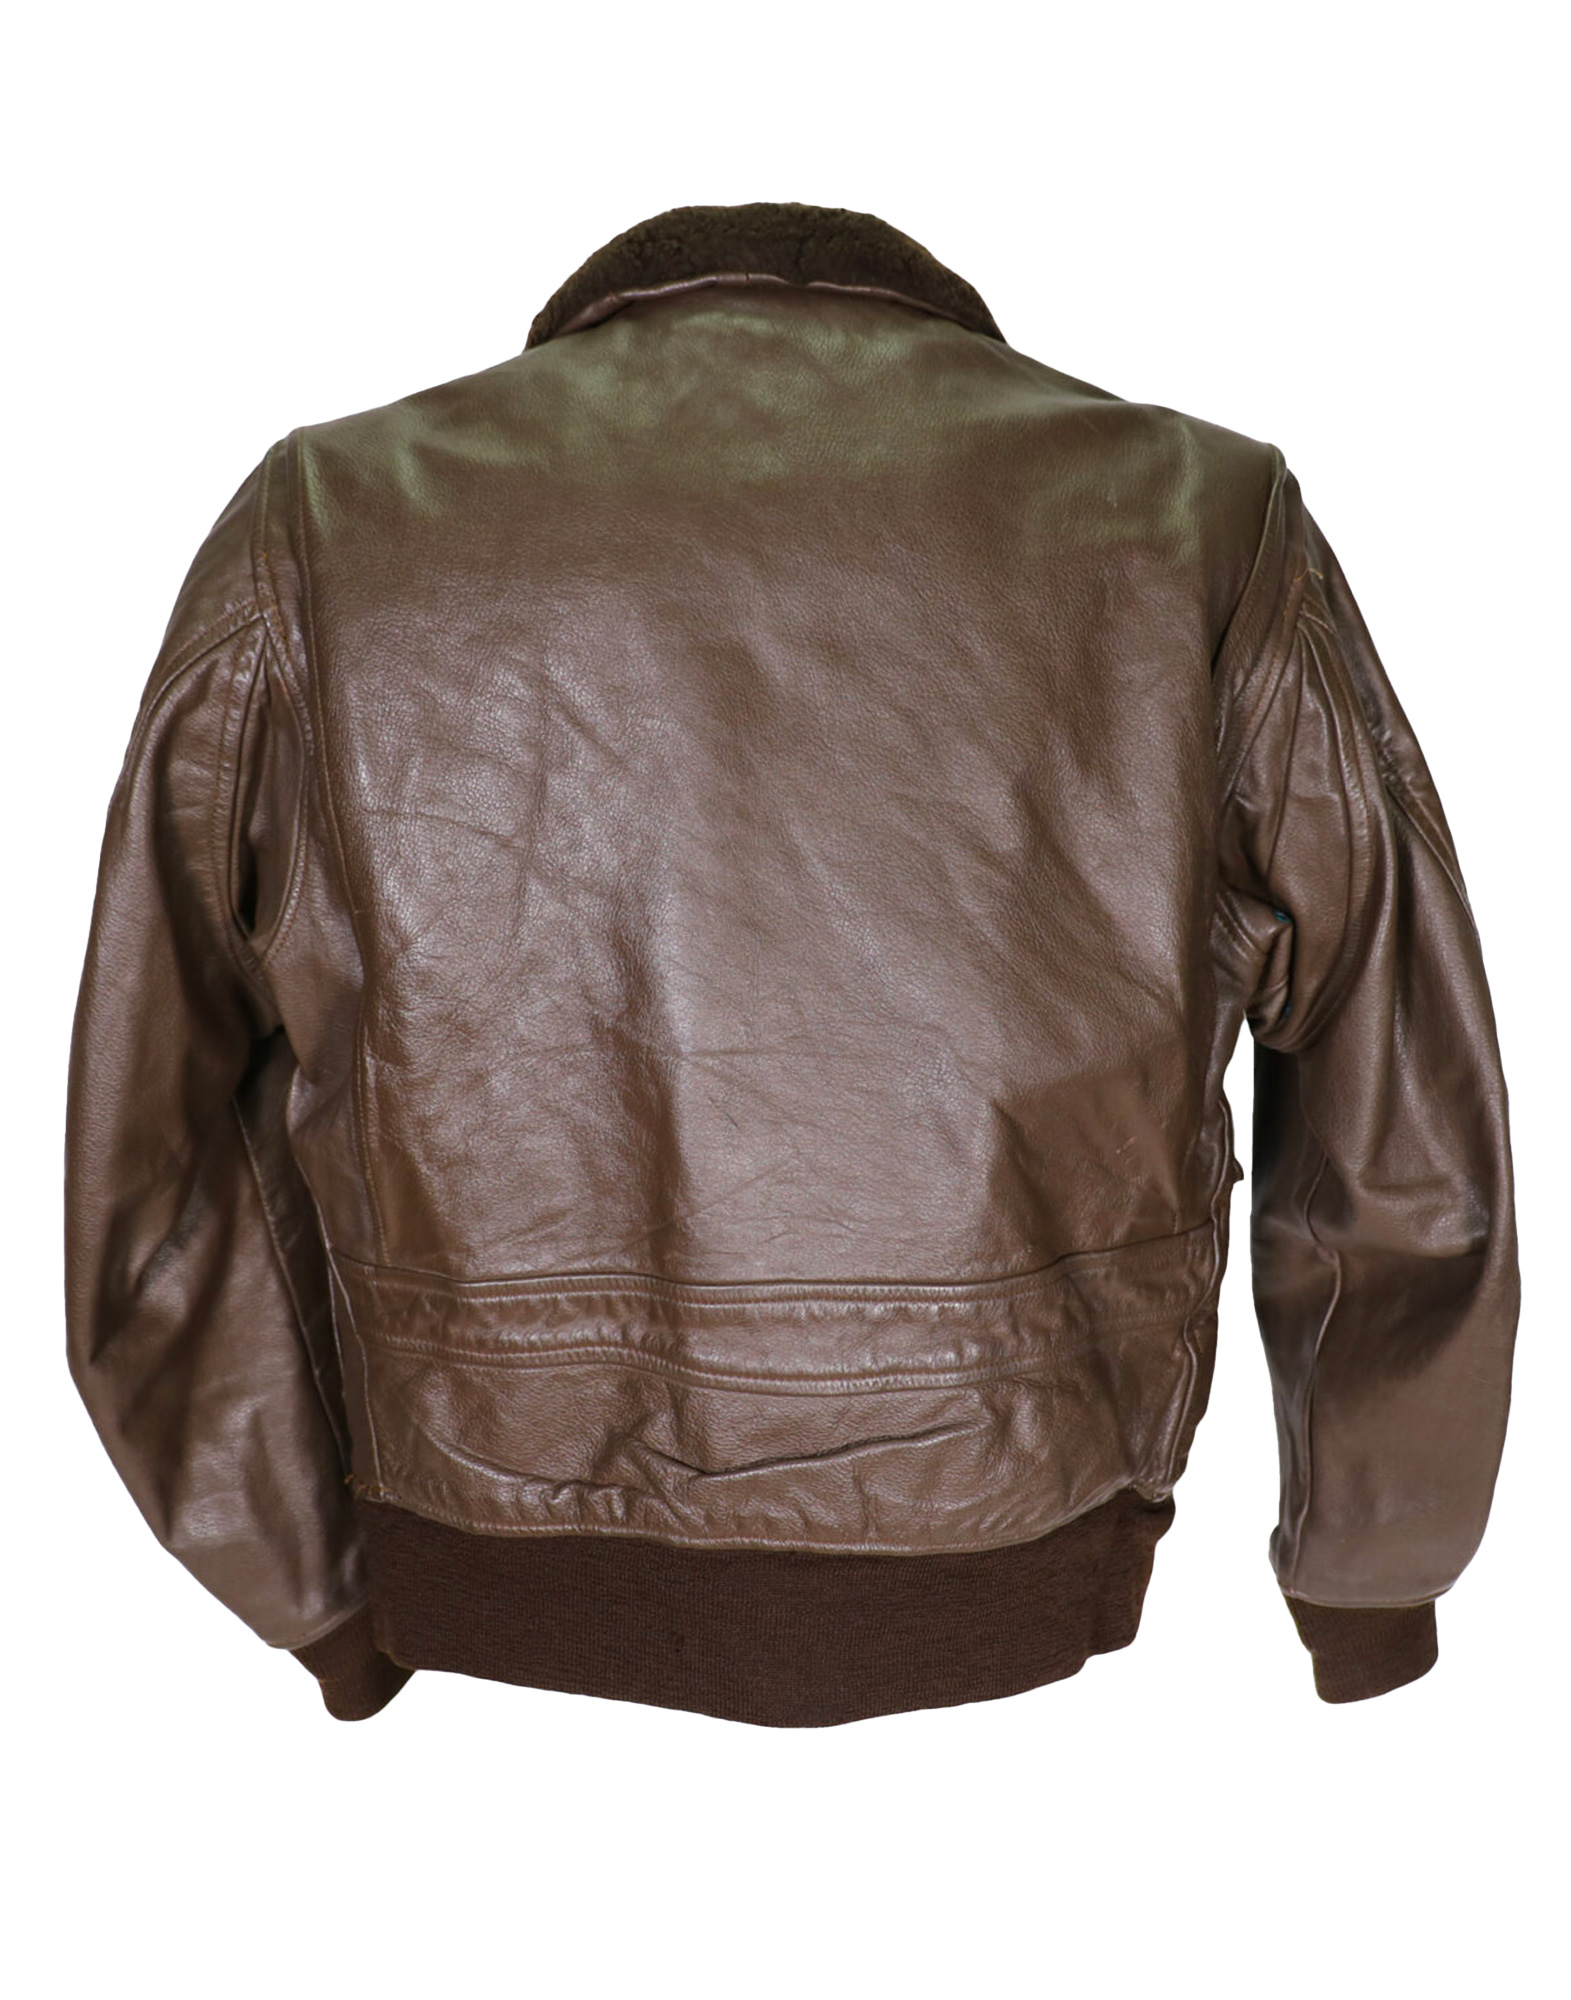 Vintage - 70s aviator style jacket